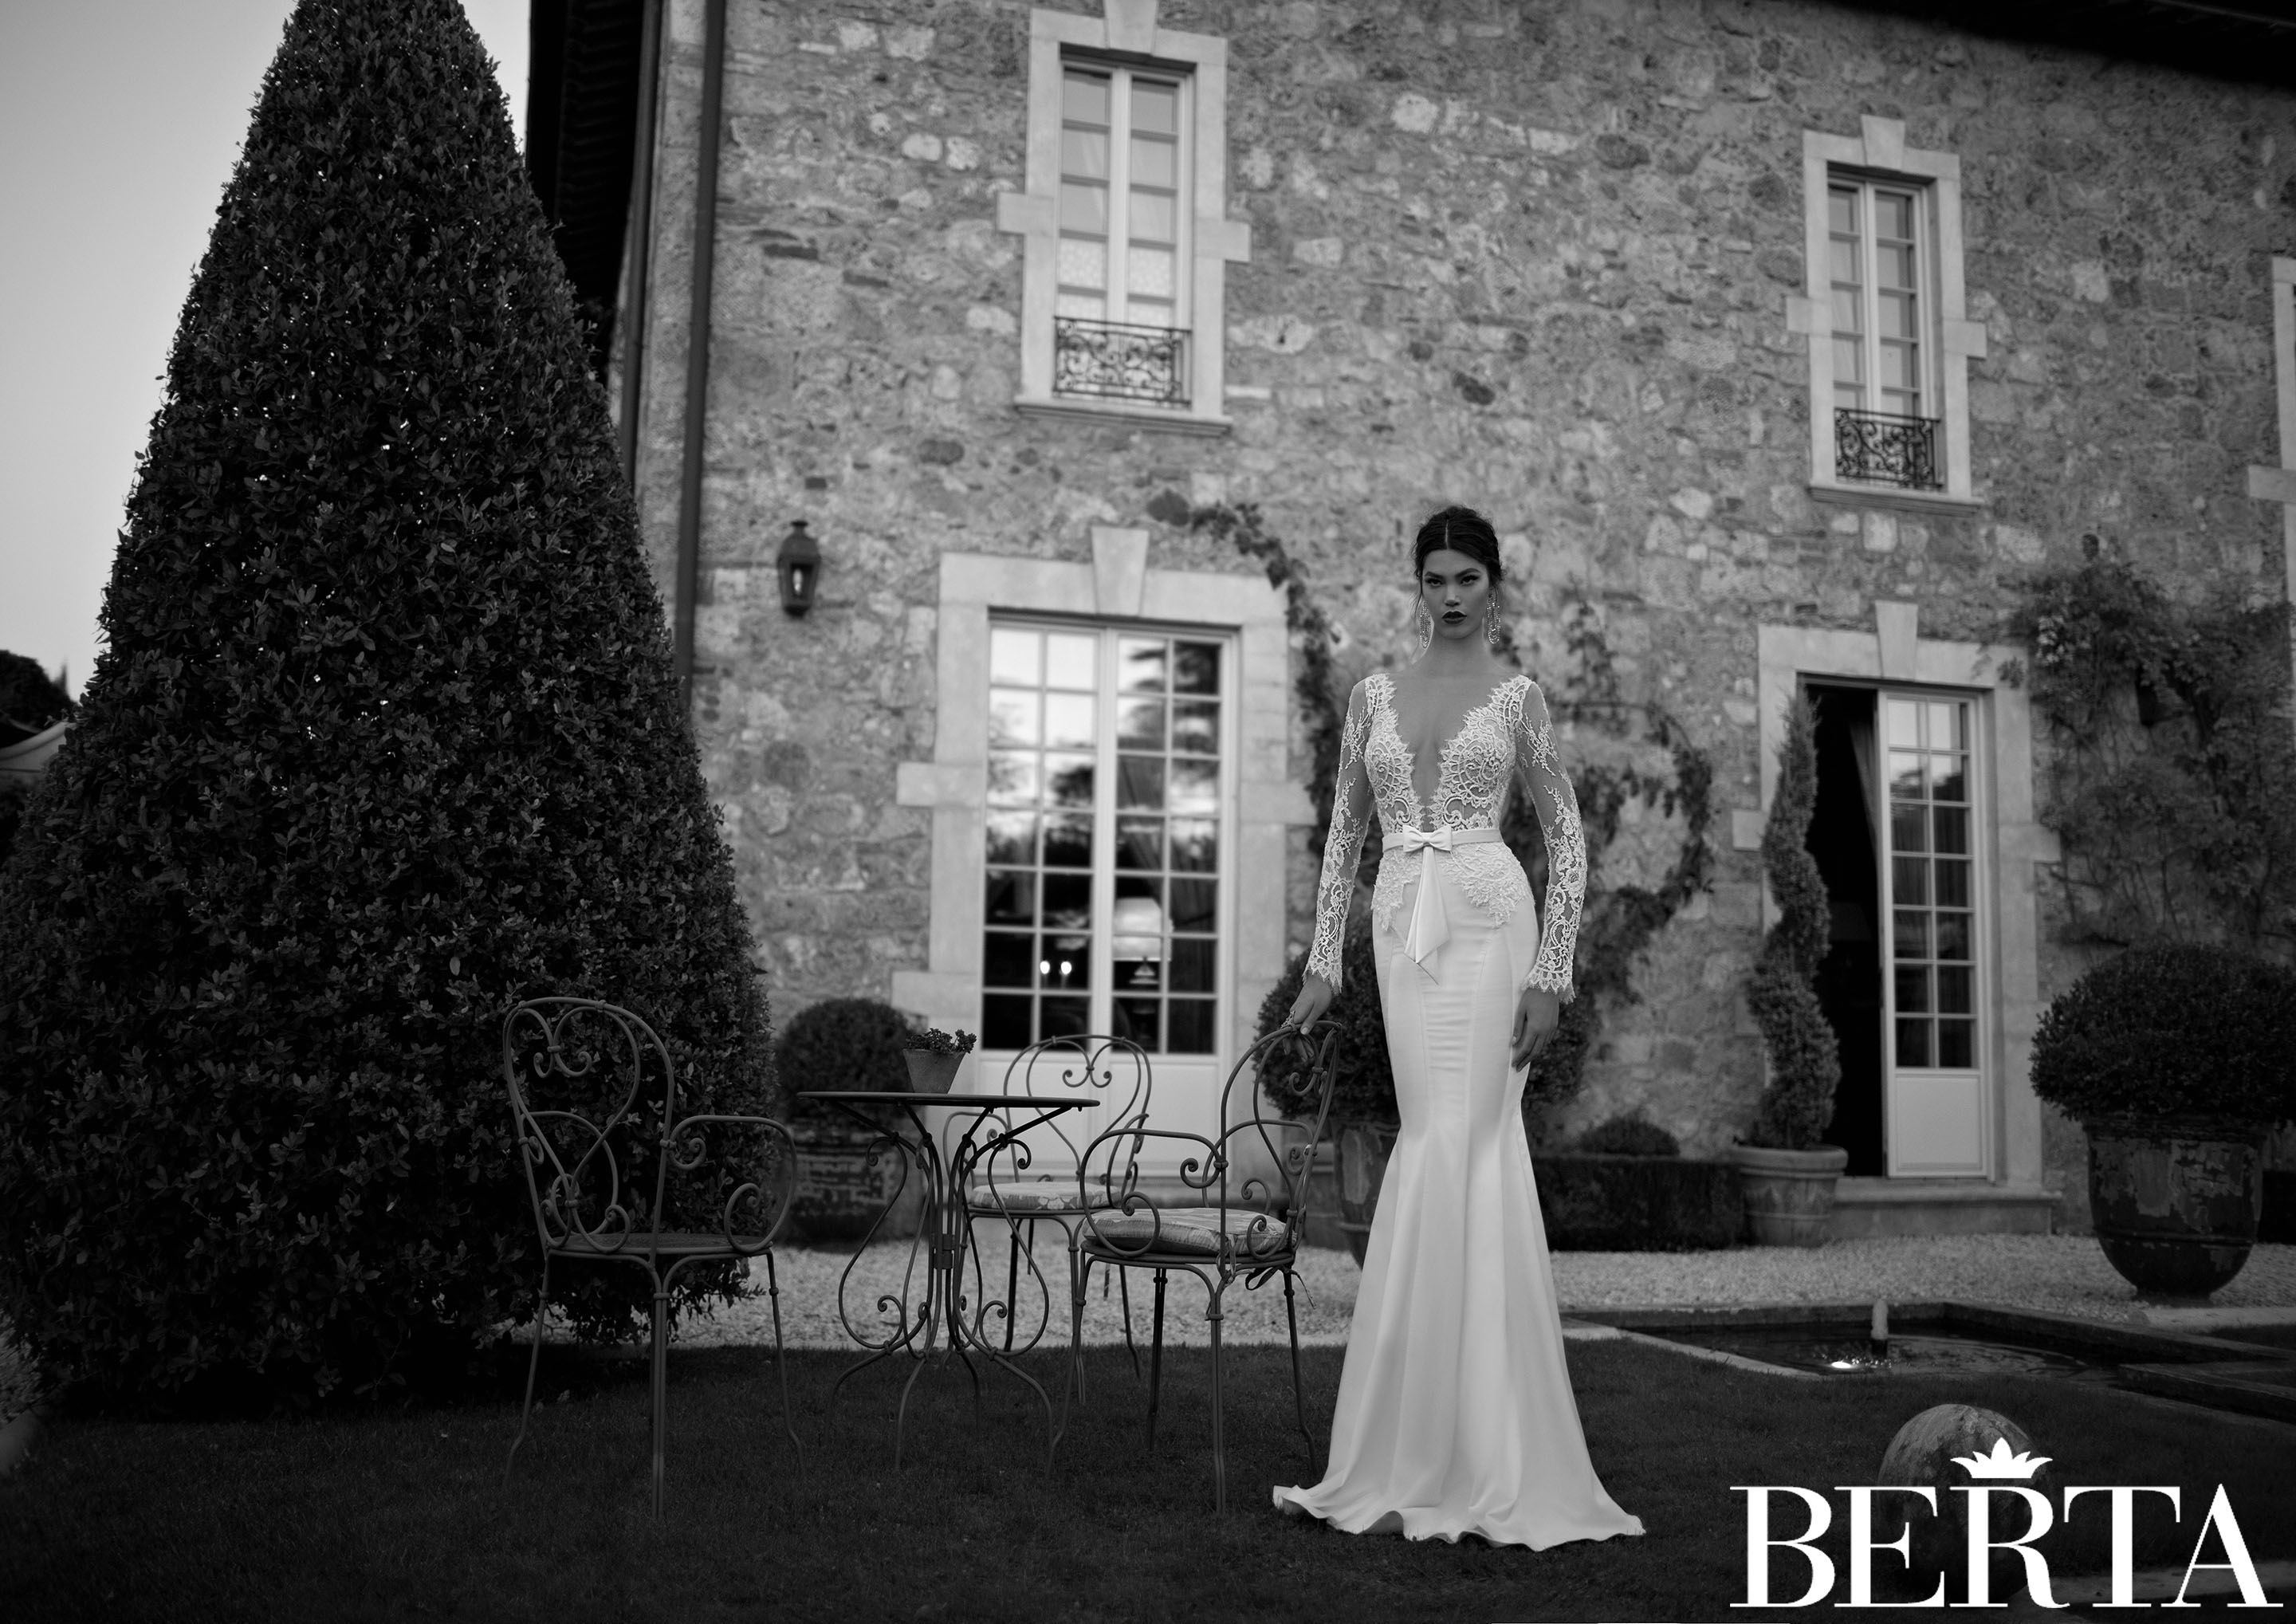 Berta Spring/Summer 2015 Bridal Collection